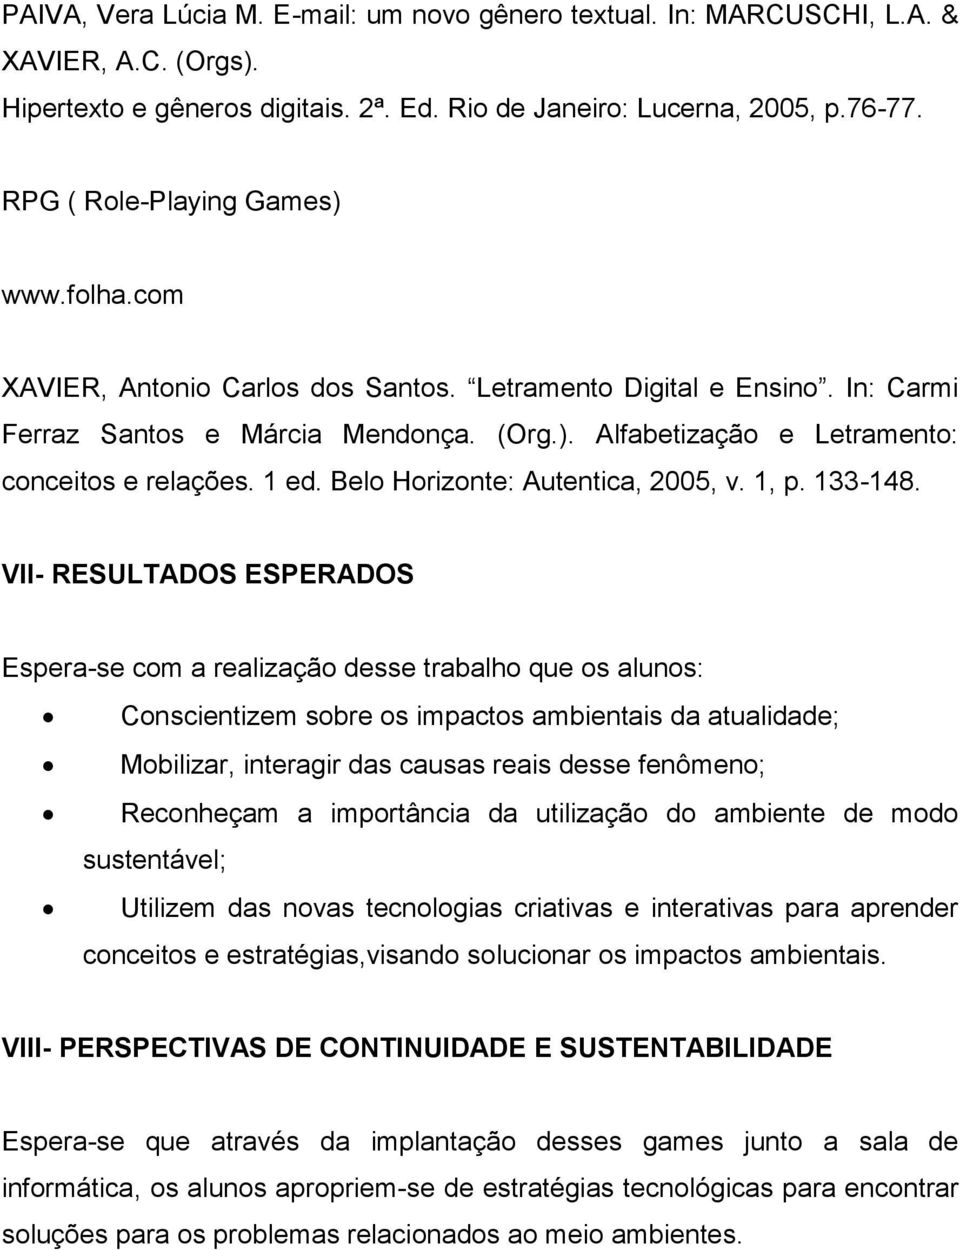 1 ed. Belo Horizonte: Autentica, 2005, v. 1, p. 133-148.